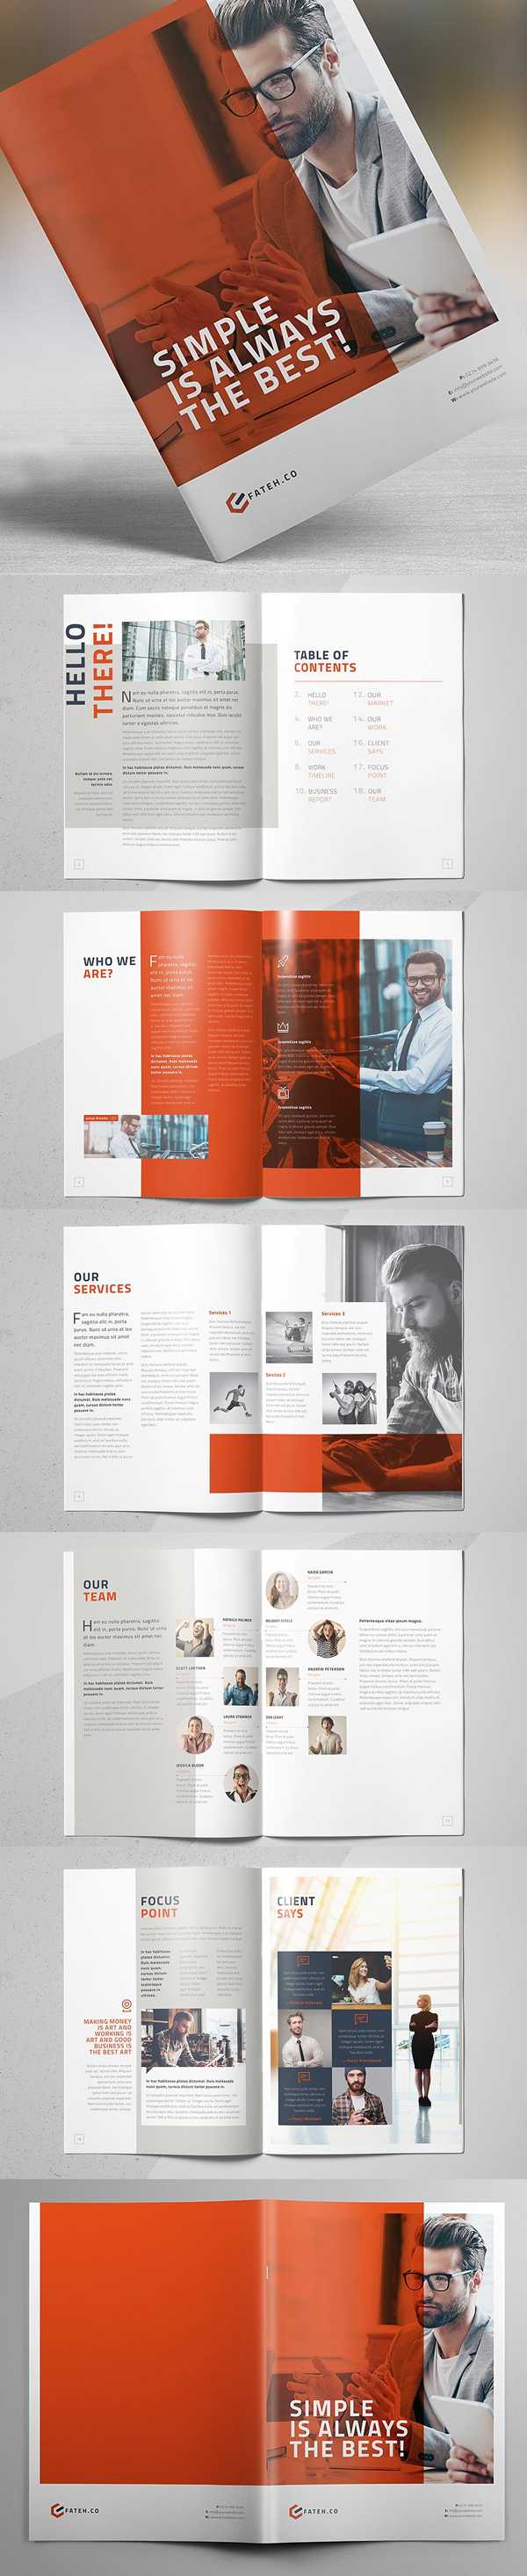 New Brochure Templates Catalog Design | Design | Graphic With Regard To Good Brochure Templates